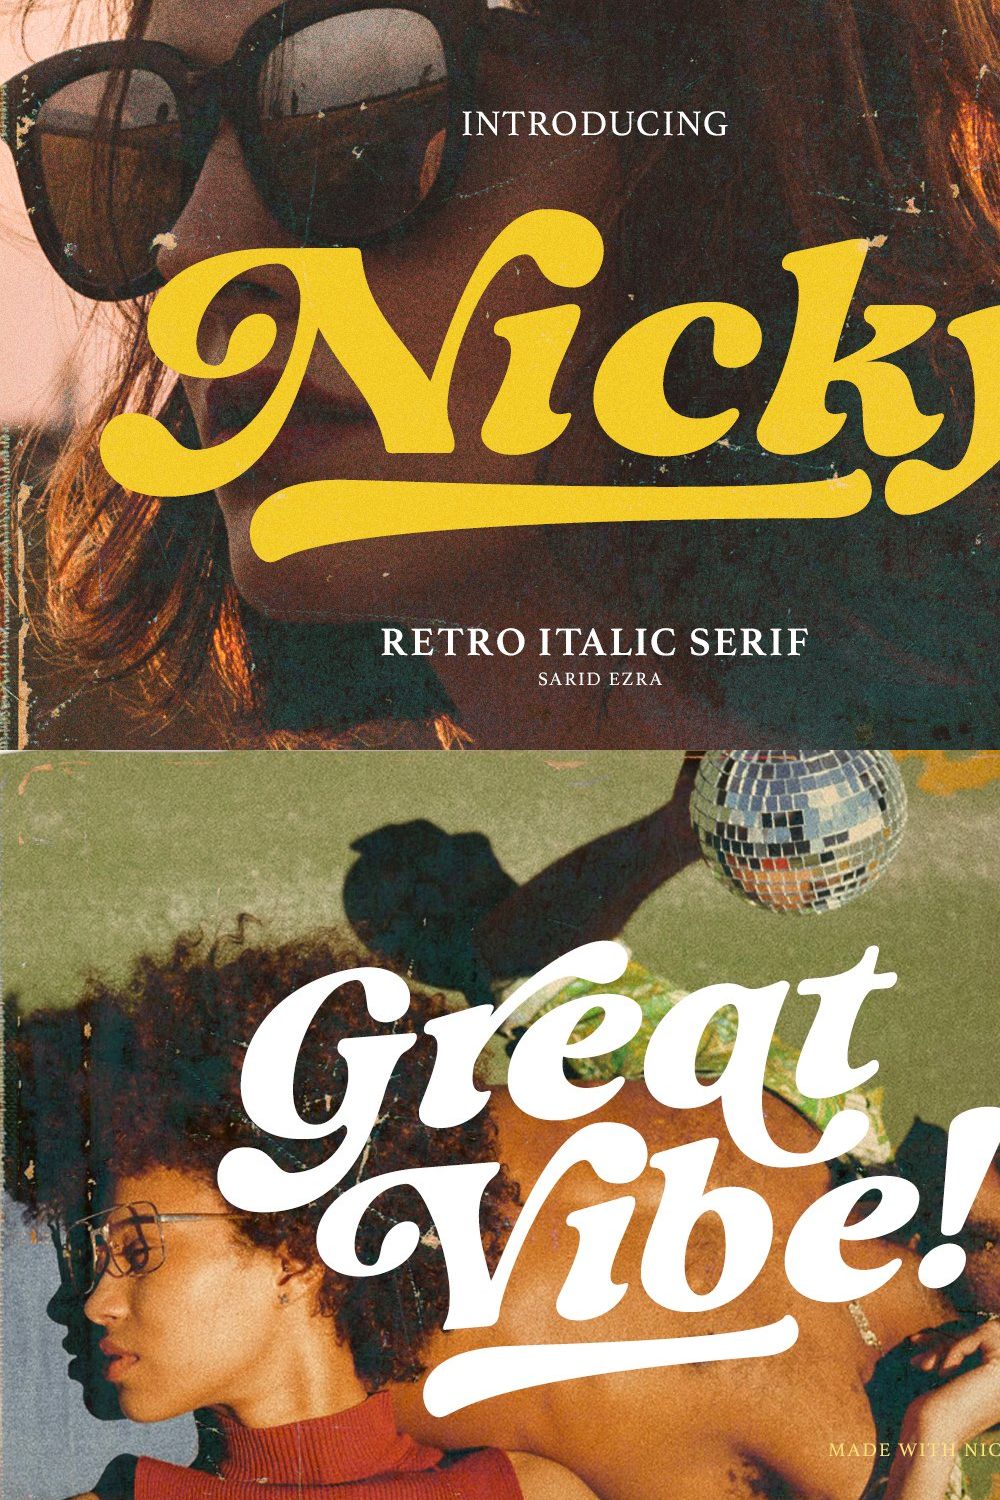 Nicky - Retro Italic Serif pinterest preview image.